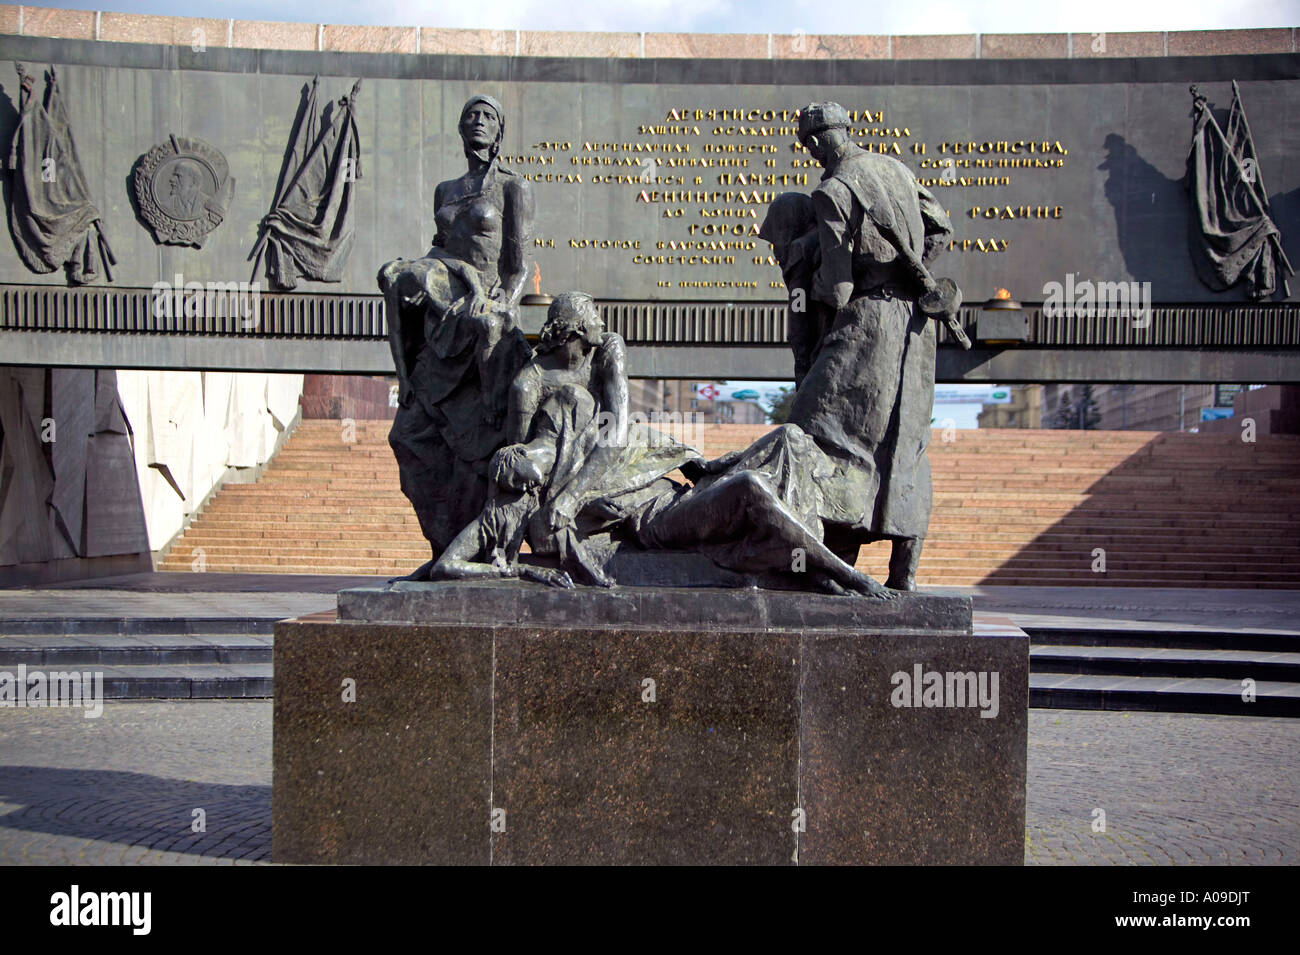 Sankt Petersburg, Denkmal fuer die Verteidiger Leningrads, San Pietroburgo monumento per il difensore di Leningrado in Russia Foto Stock